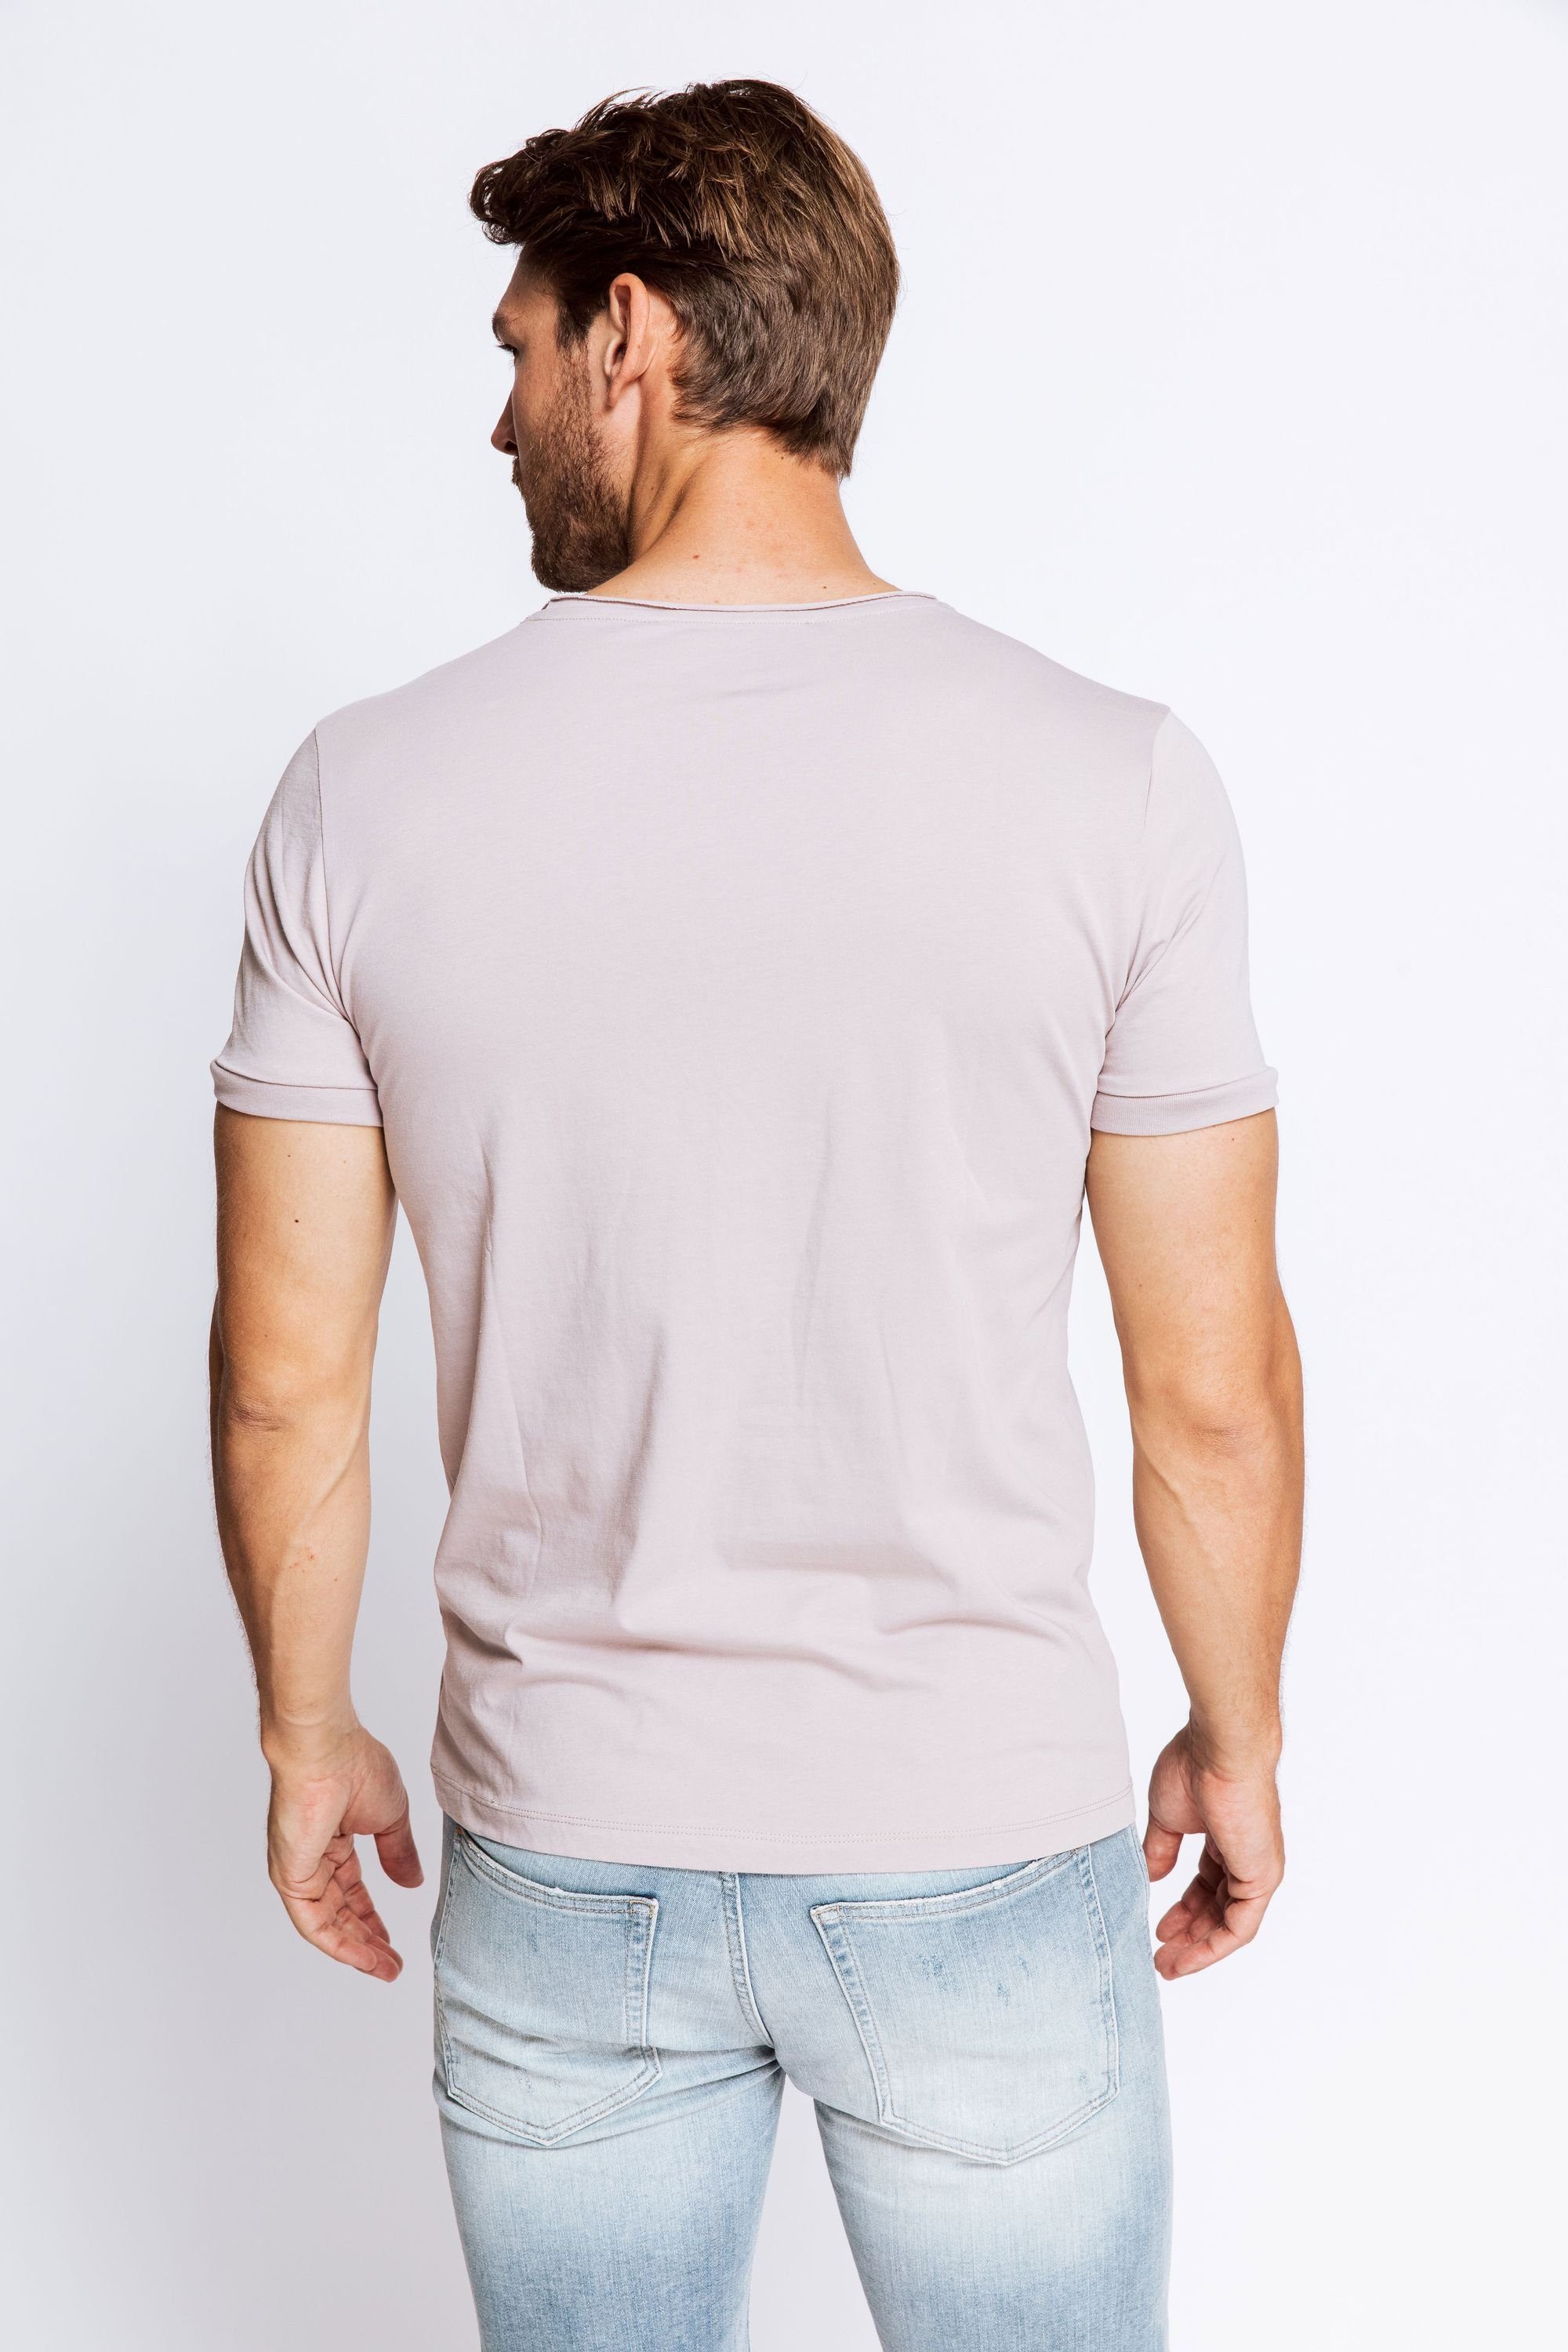 PIERRE Zhrill (0-tlg) Longshirt Lavender T-Shirt